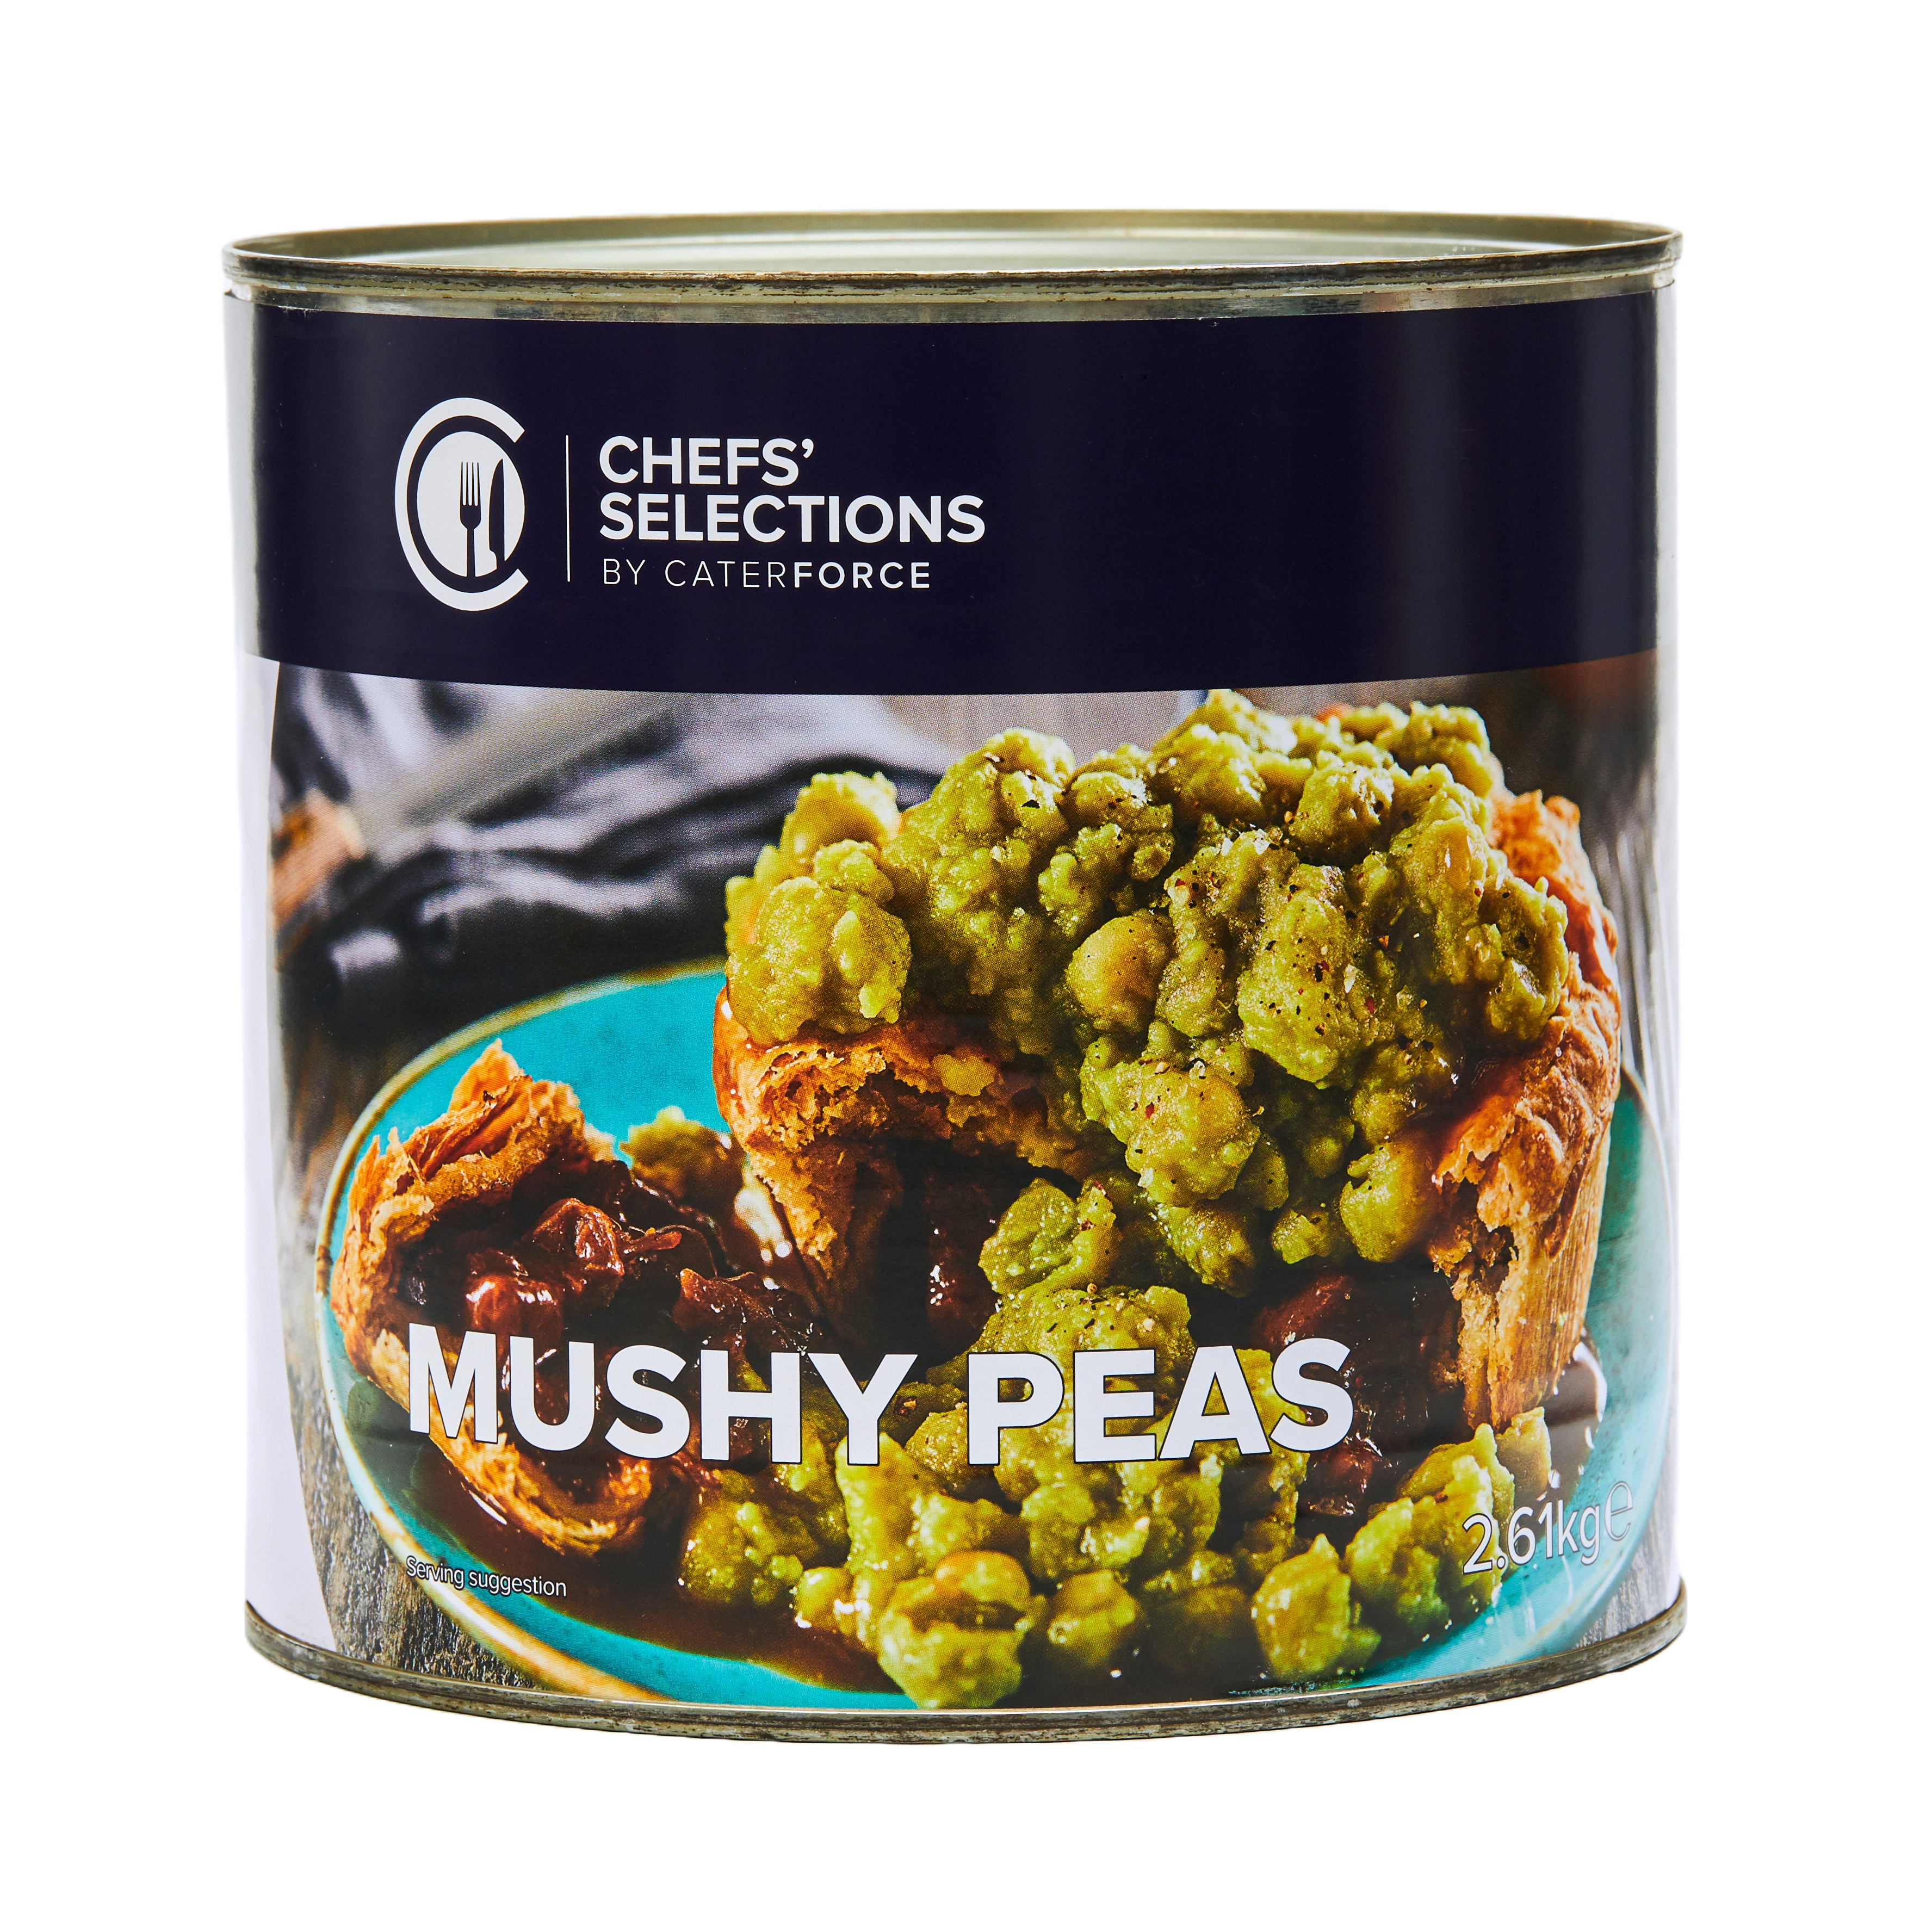 Chefs’ Selections Mushy Peas (6 x 2.6kg)